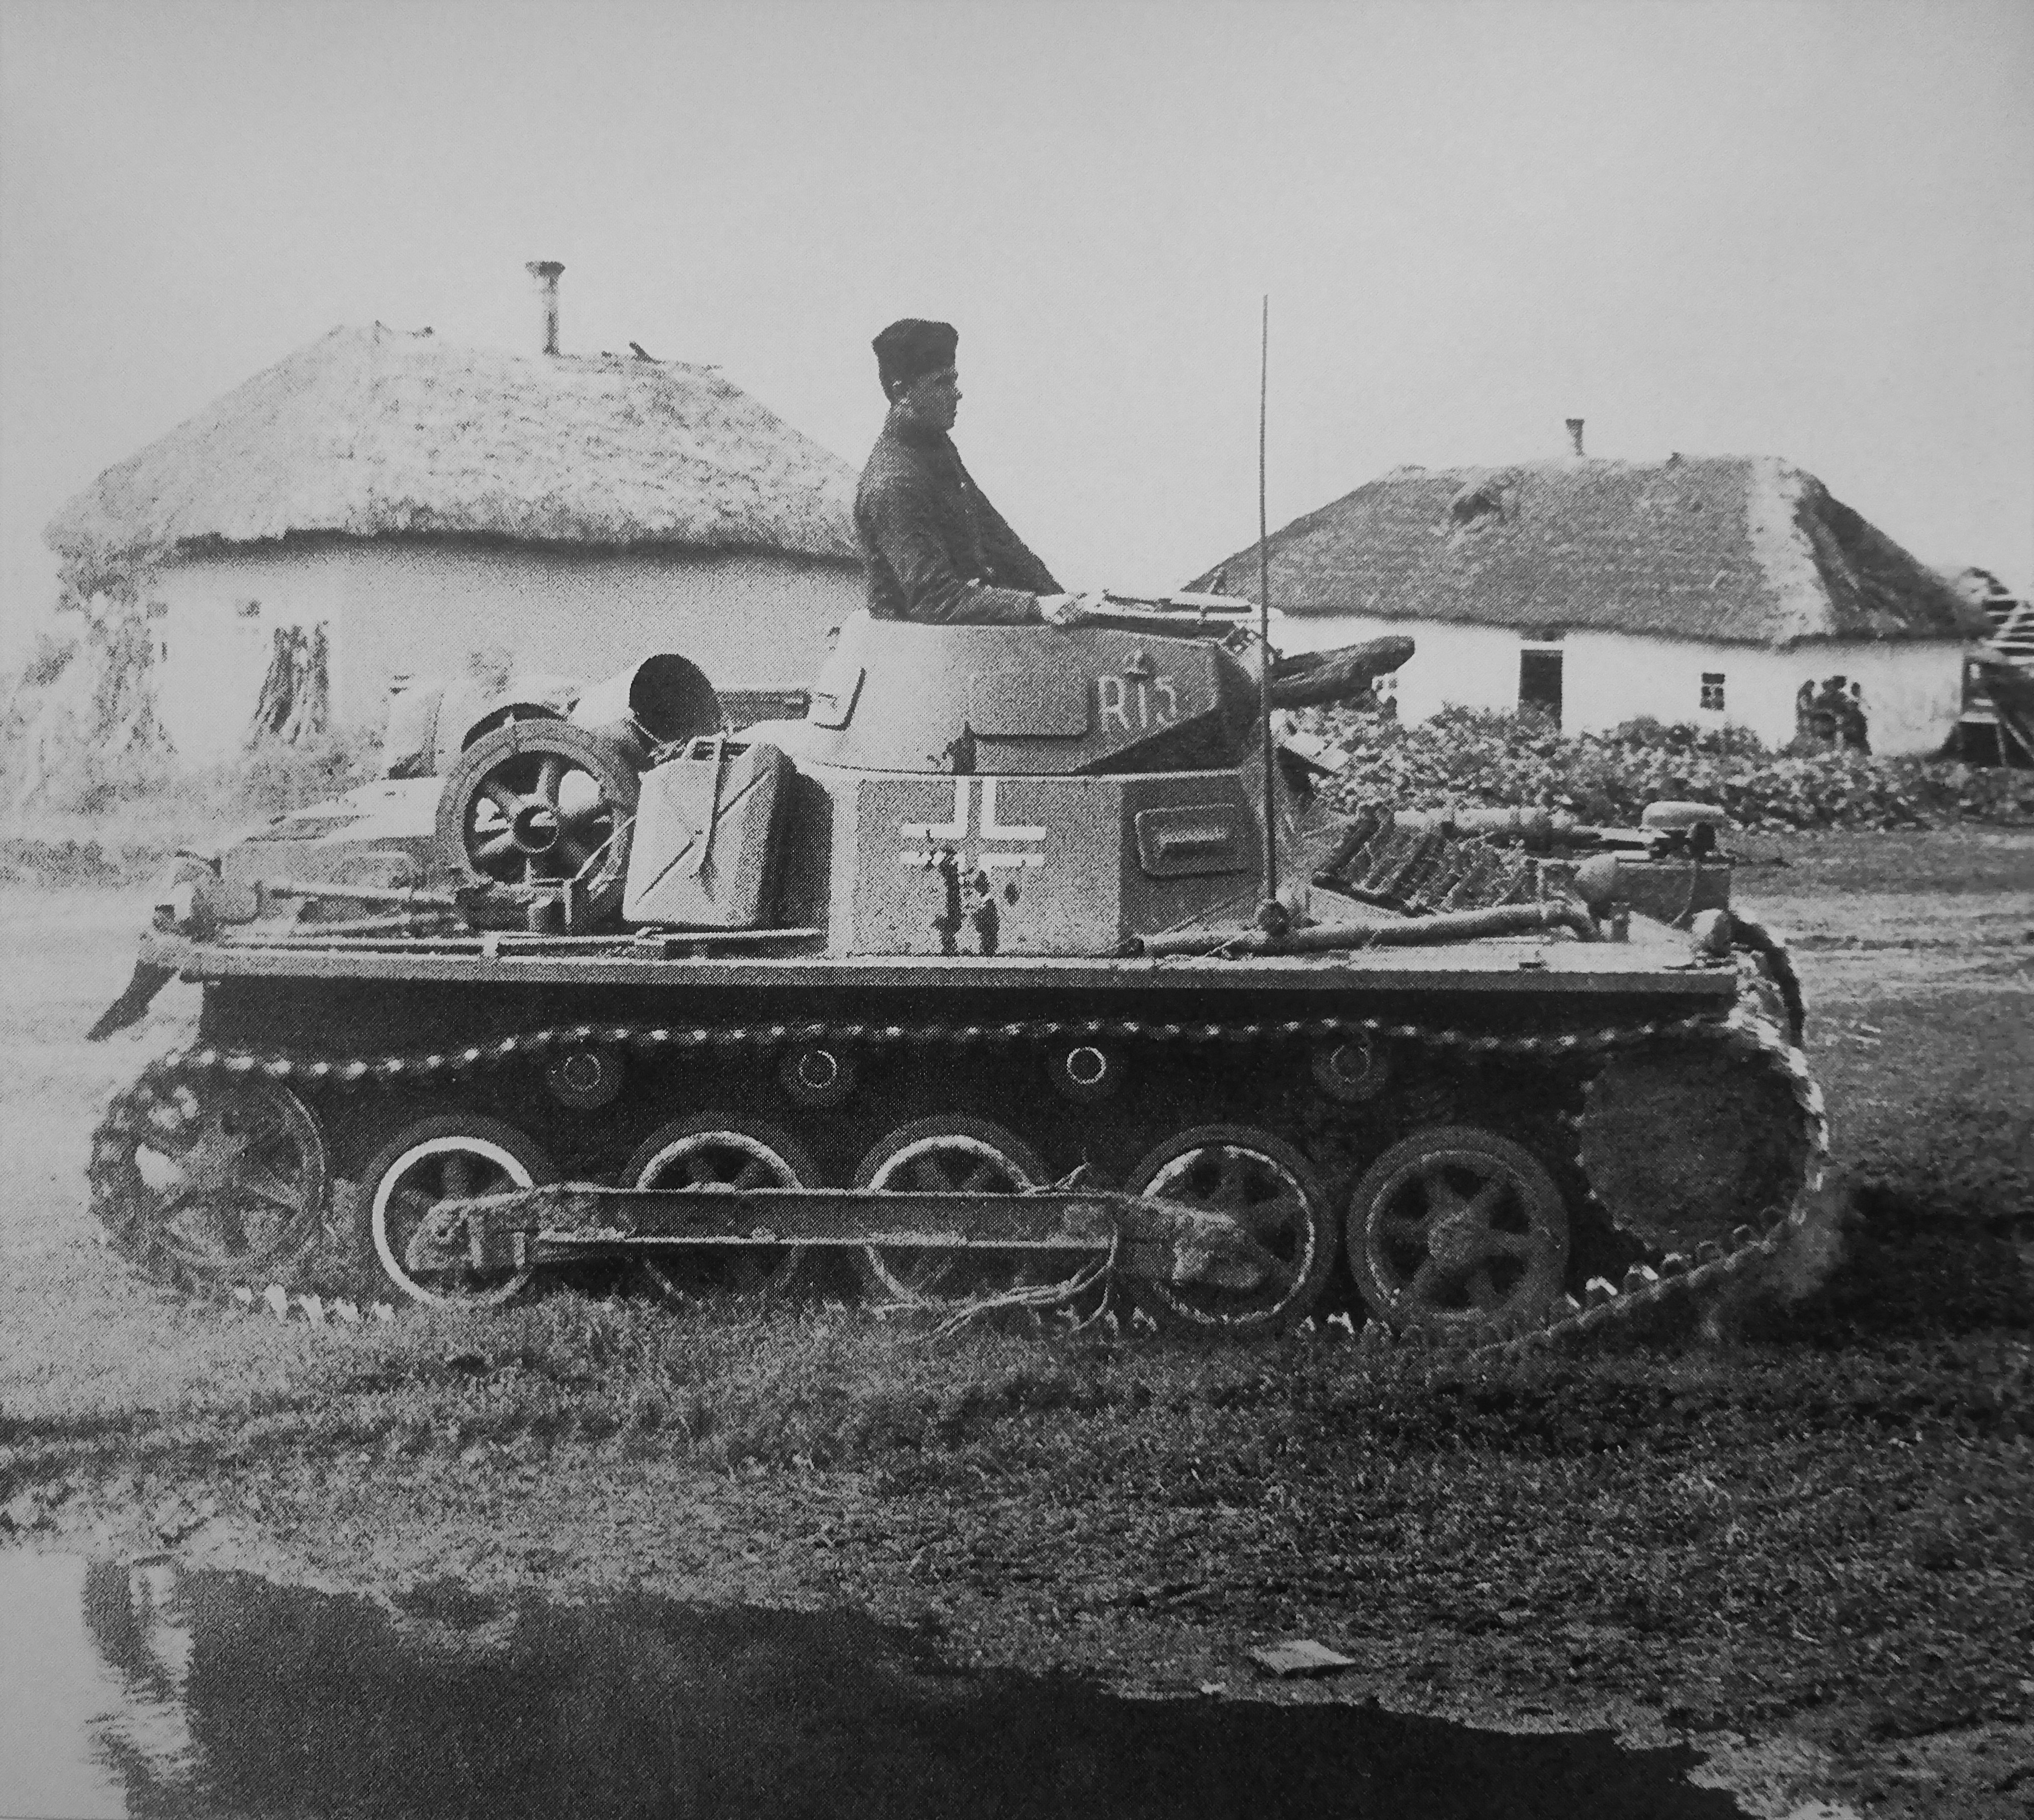 Pz kpfw 1 ausf. Танк панцер 1. 7 Танковая дивизия вермахта 1941 PZ Kpfw i. Panzerkampfwagen 1. Танк PZ 1.